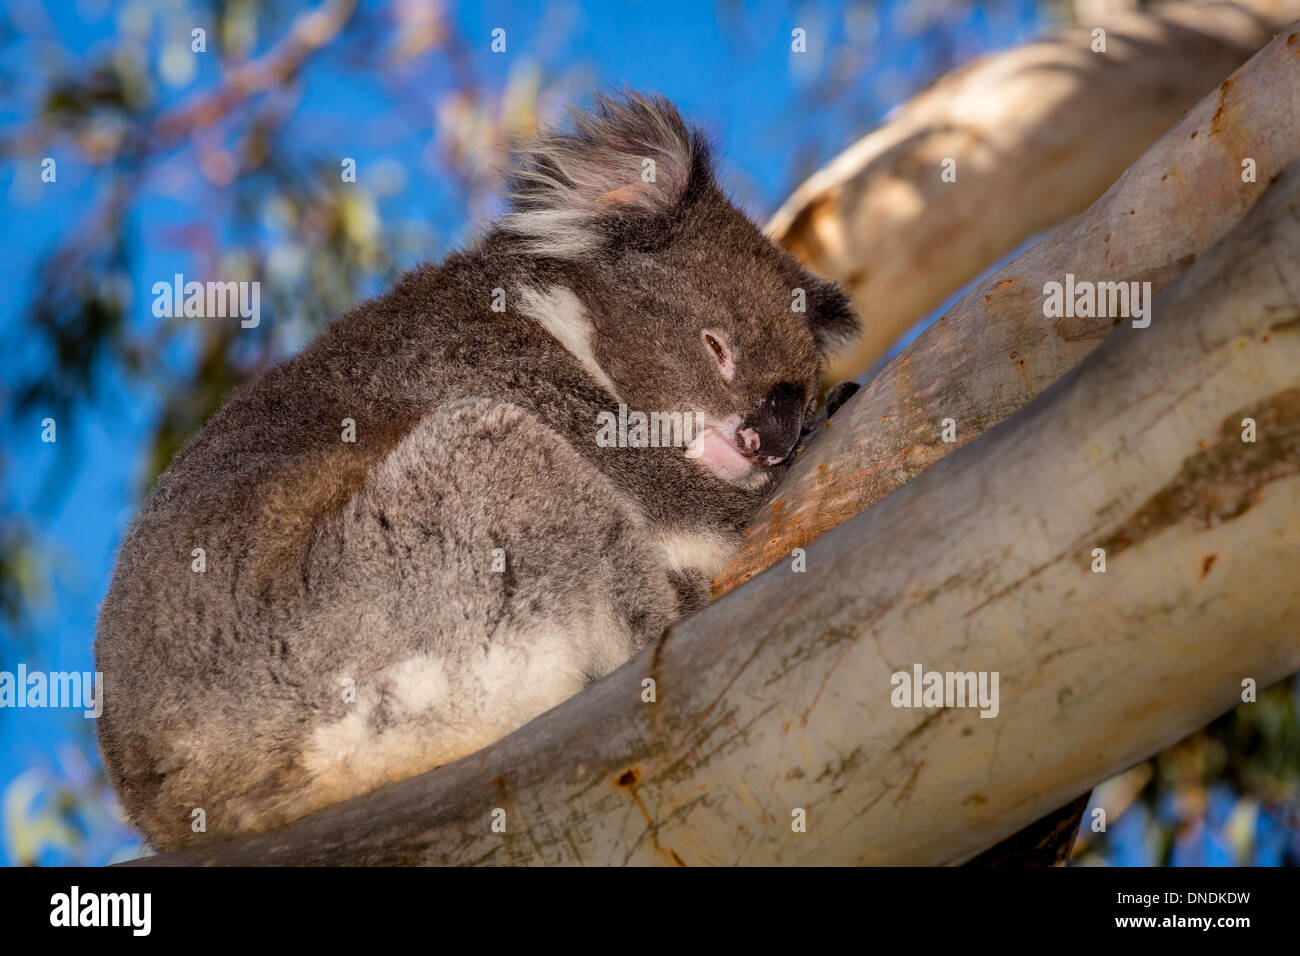 Adult koala (Phascolarctos cinereus), Australia Stock Photo